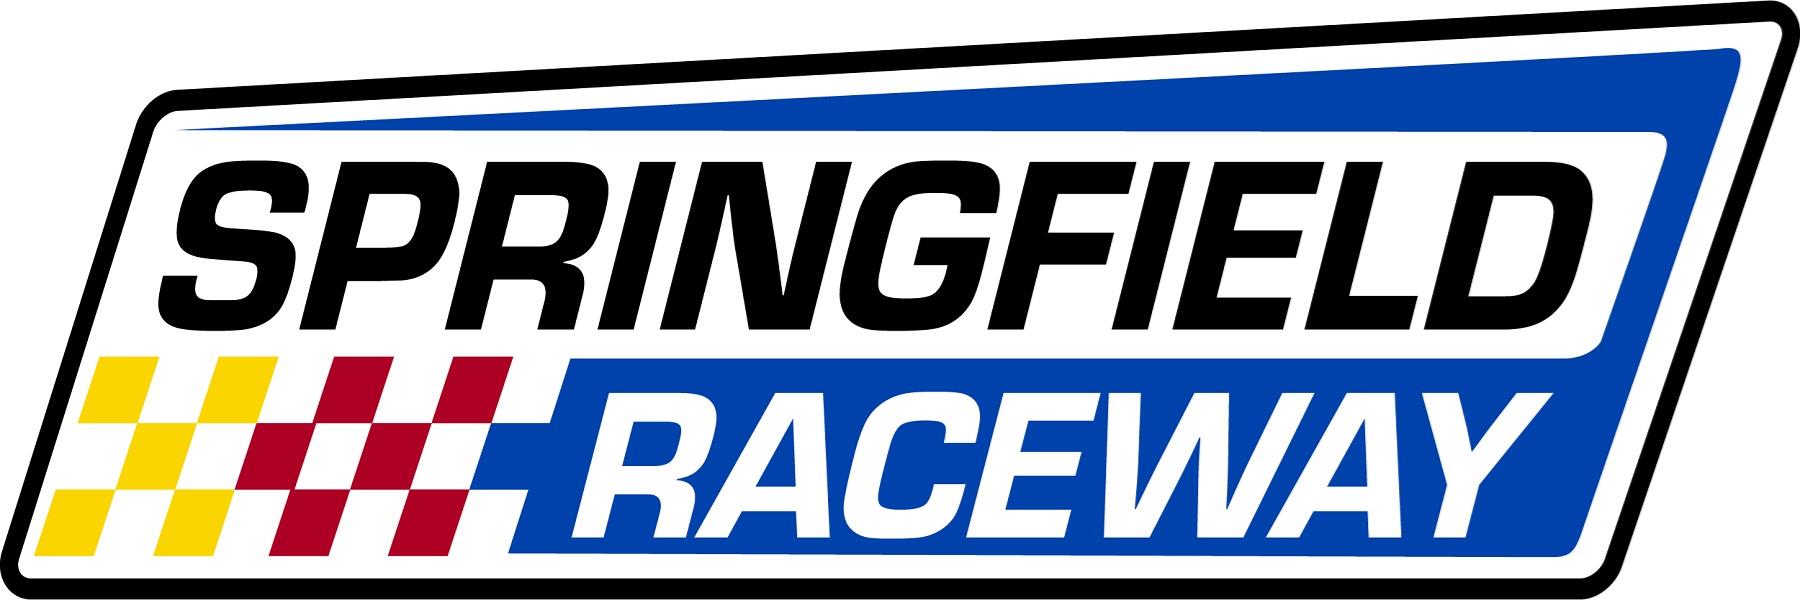 4/11/2021 - Springfield Raceway